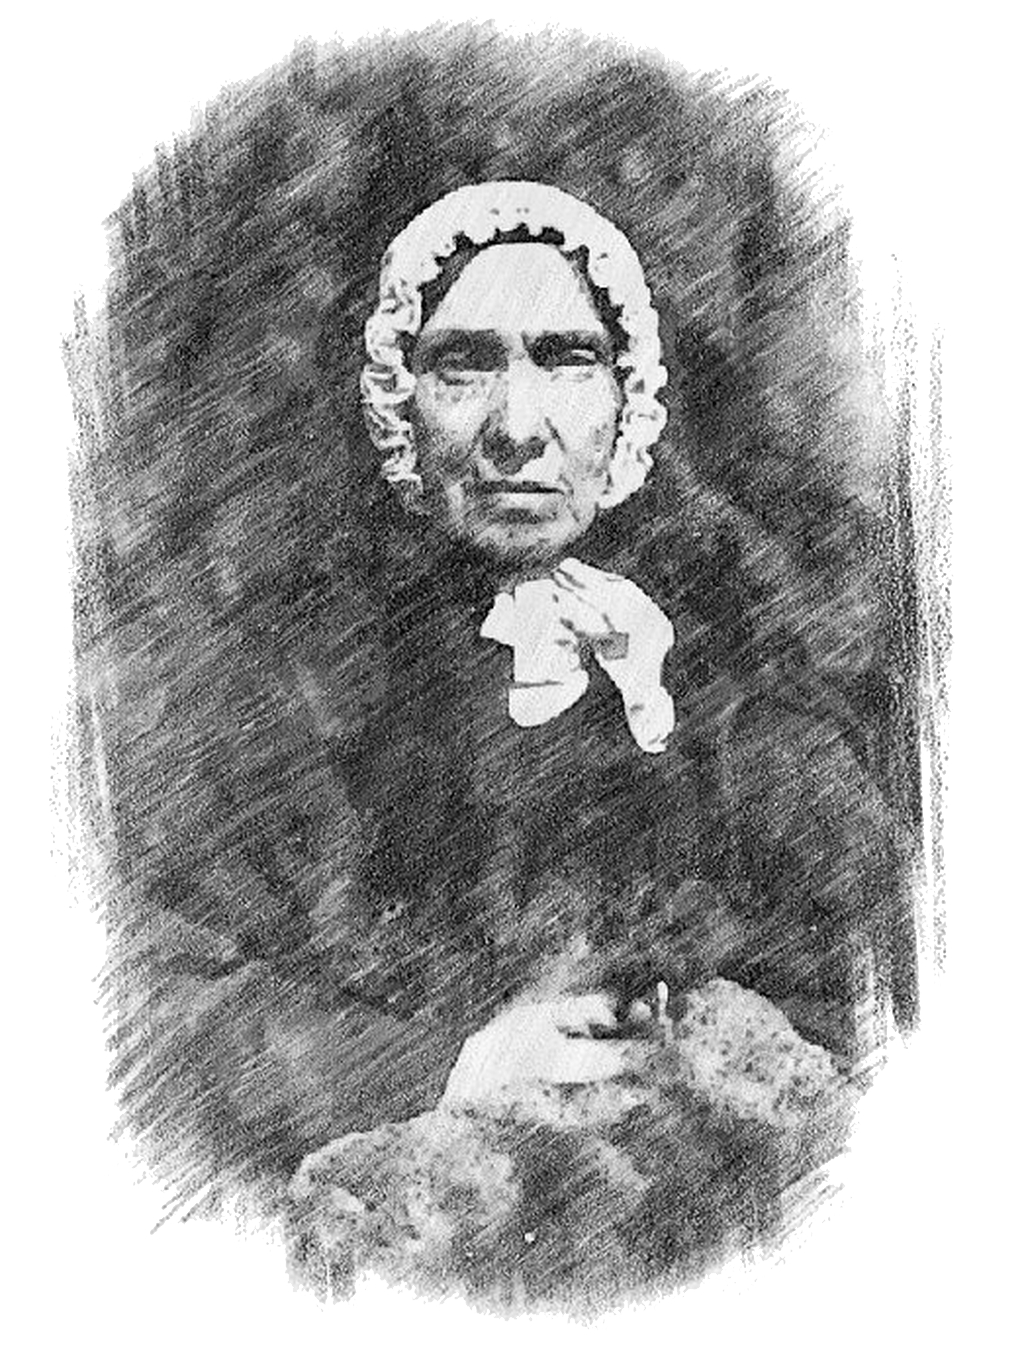 Isabella Burns - Composed by John C Grant (https://johncgrant.com). Traditional composer from Kilmarnock, Ayrshire, Scotland.